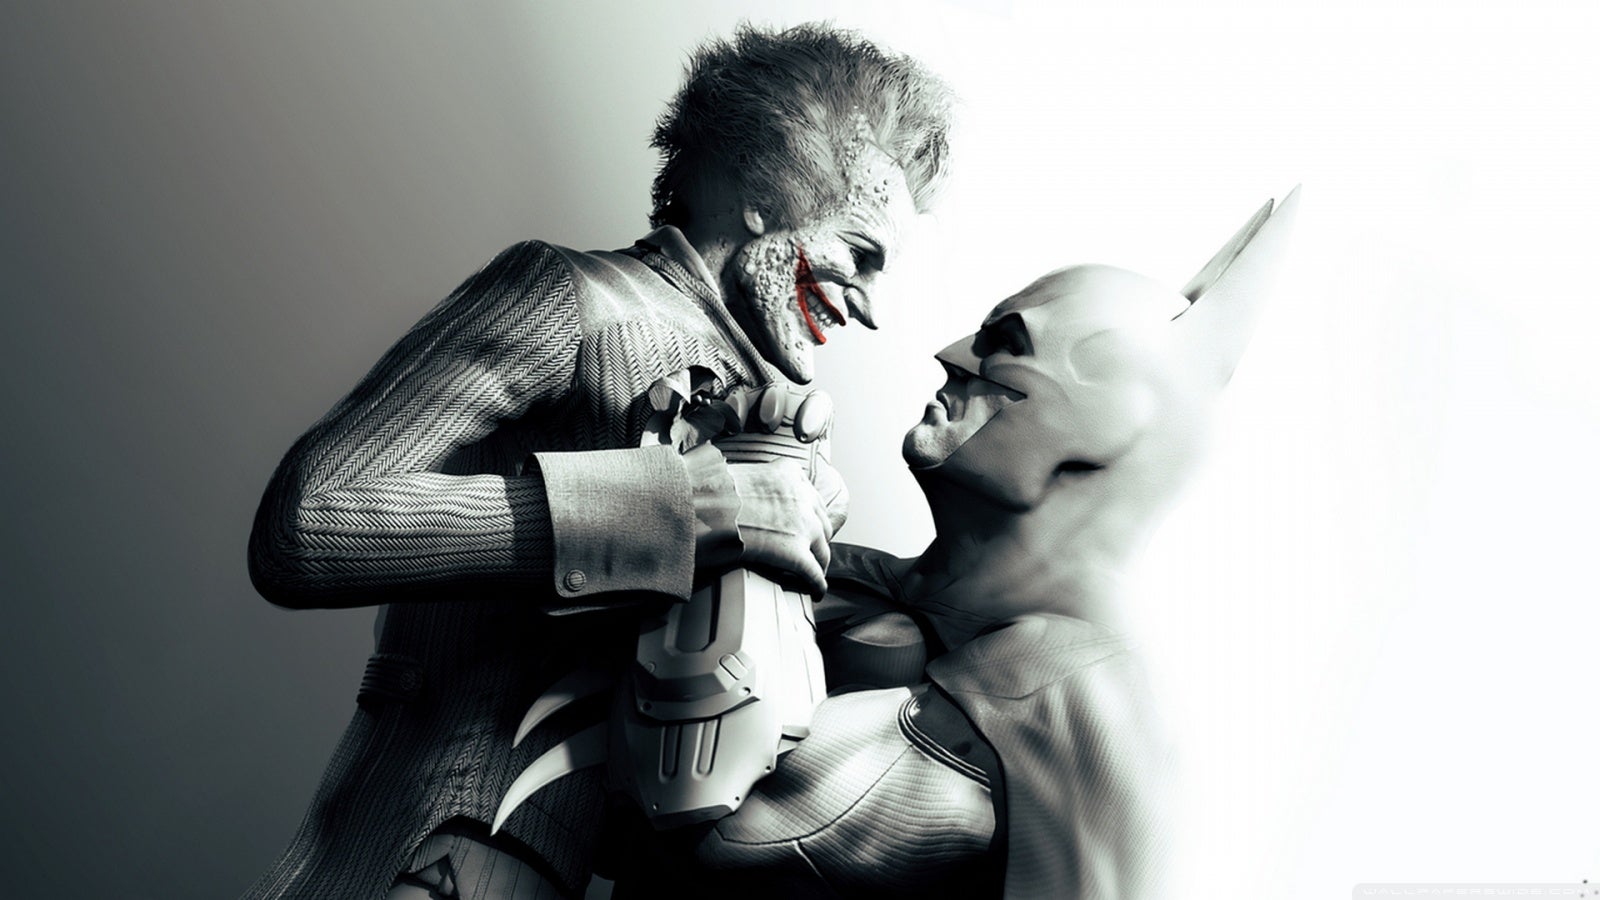 Obrazki dla Batman: Arkham Asylum oraz Arkham City na PS4 i Xbox One? - raport